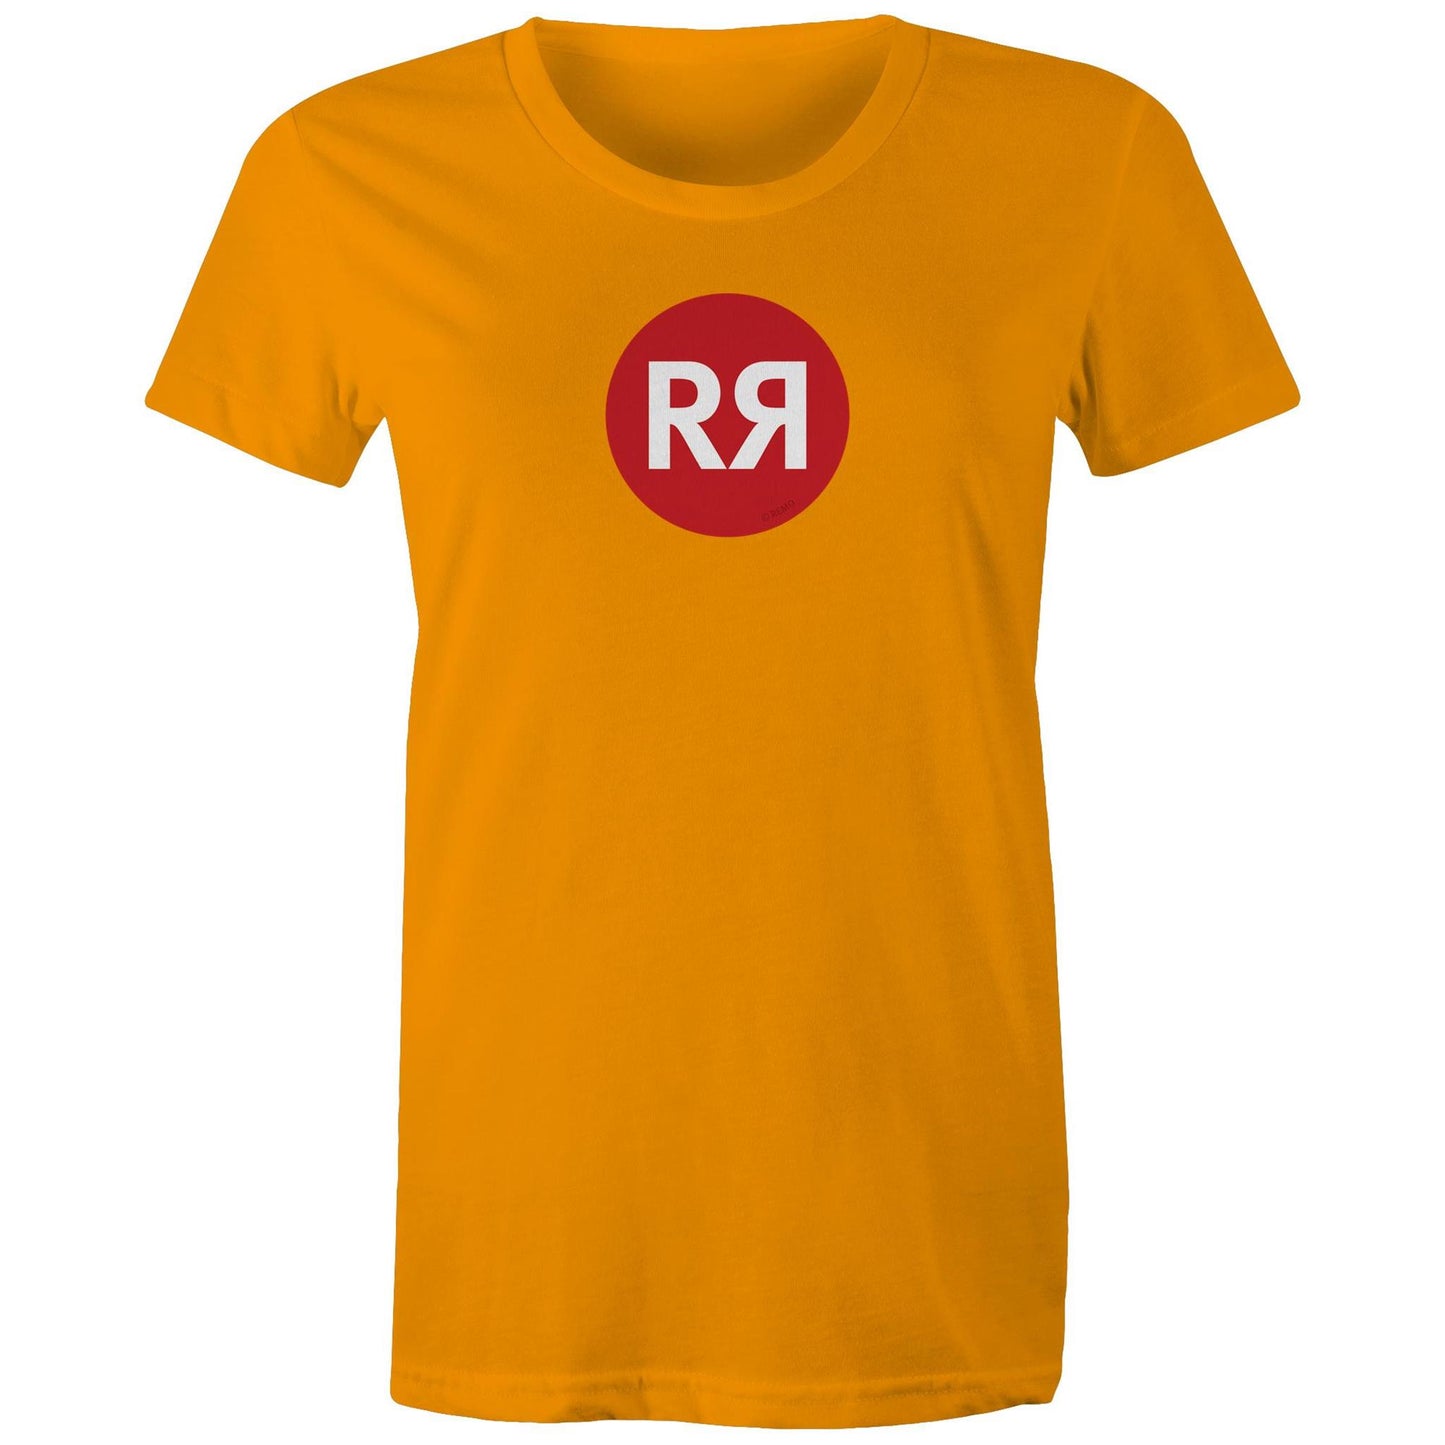 REMORANDOM T Shirts for Women